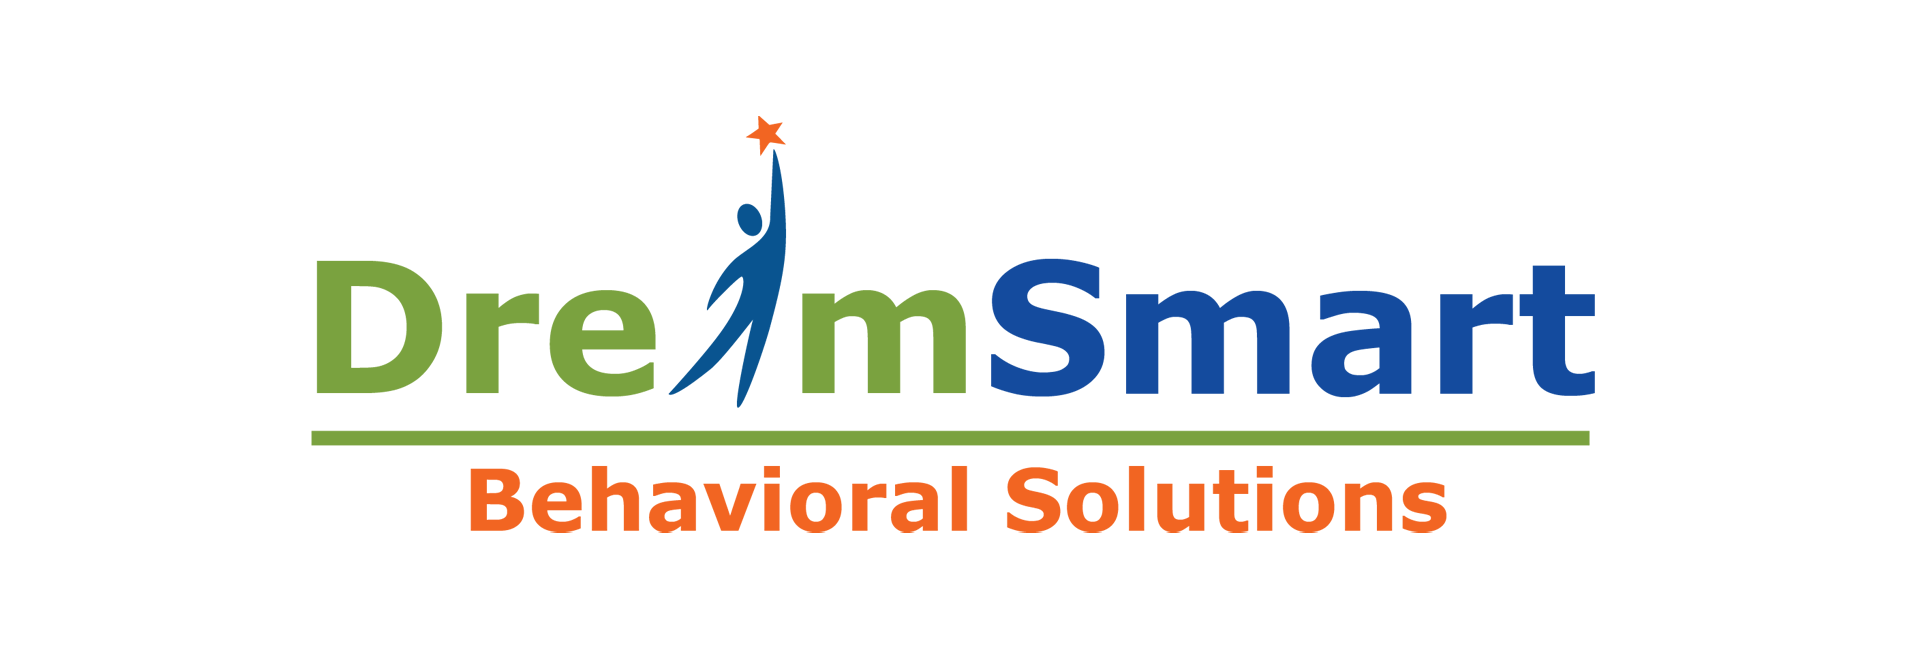 DreamSmart Behavioral Solutions